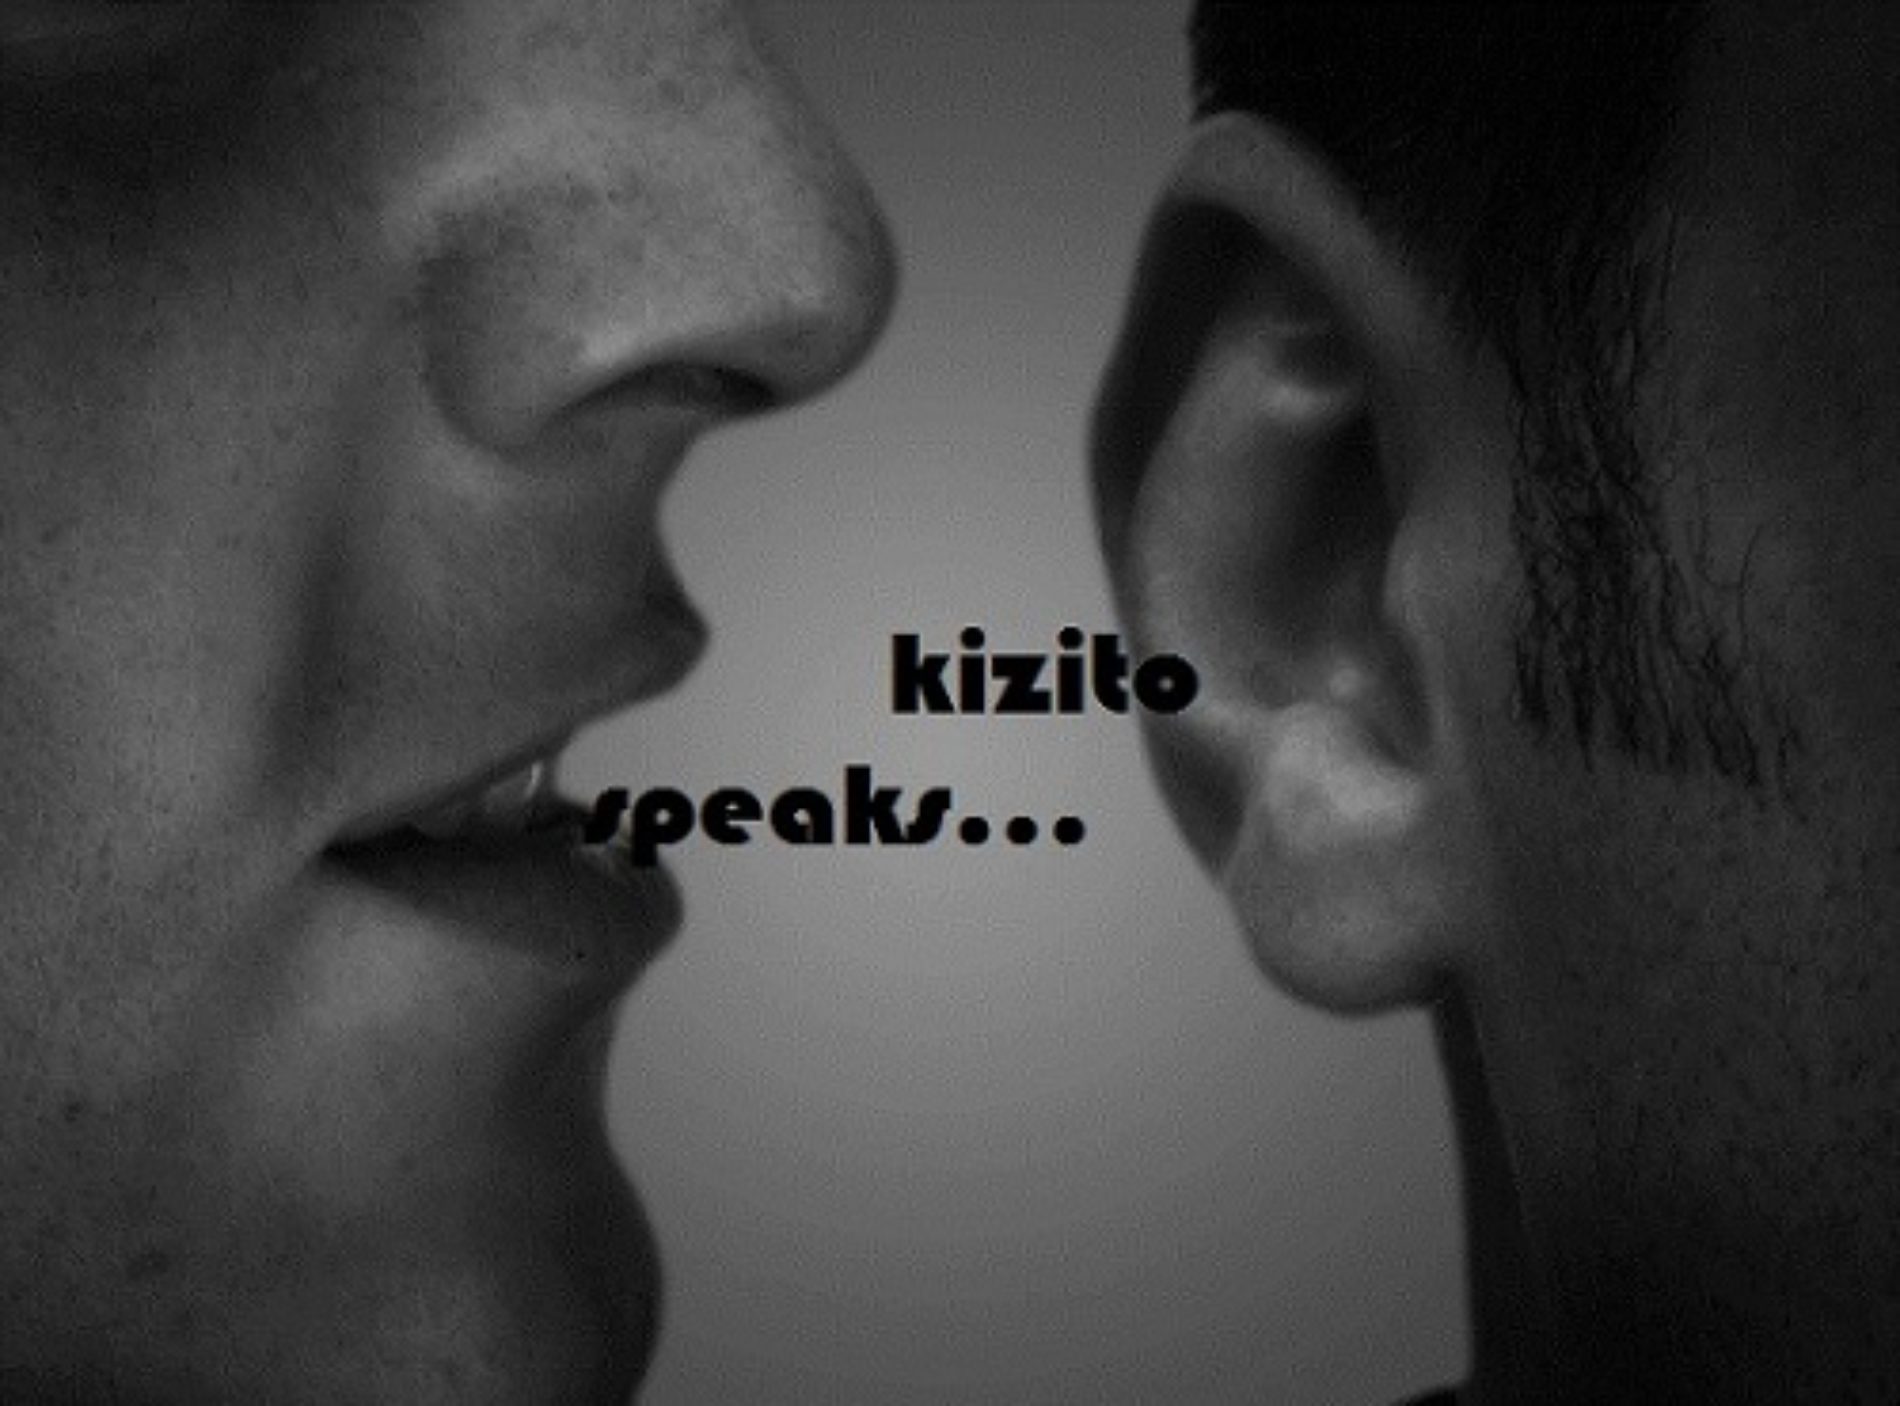 KIZITO SPEAKS X